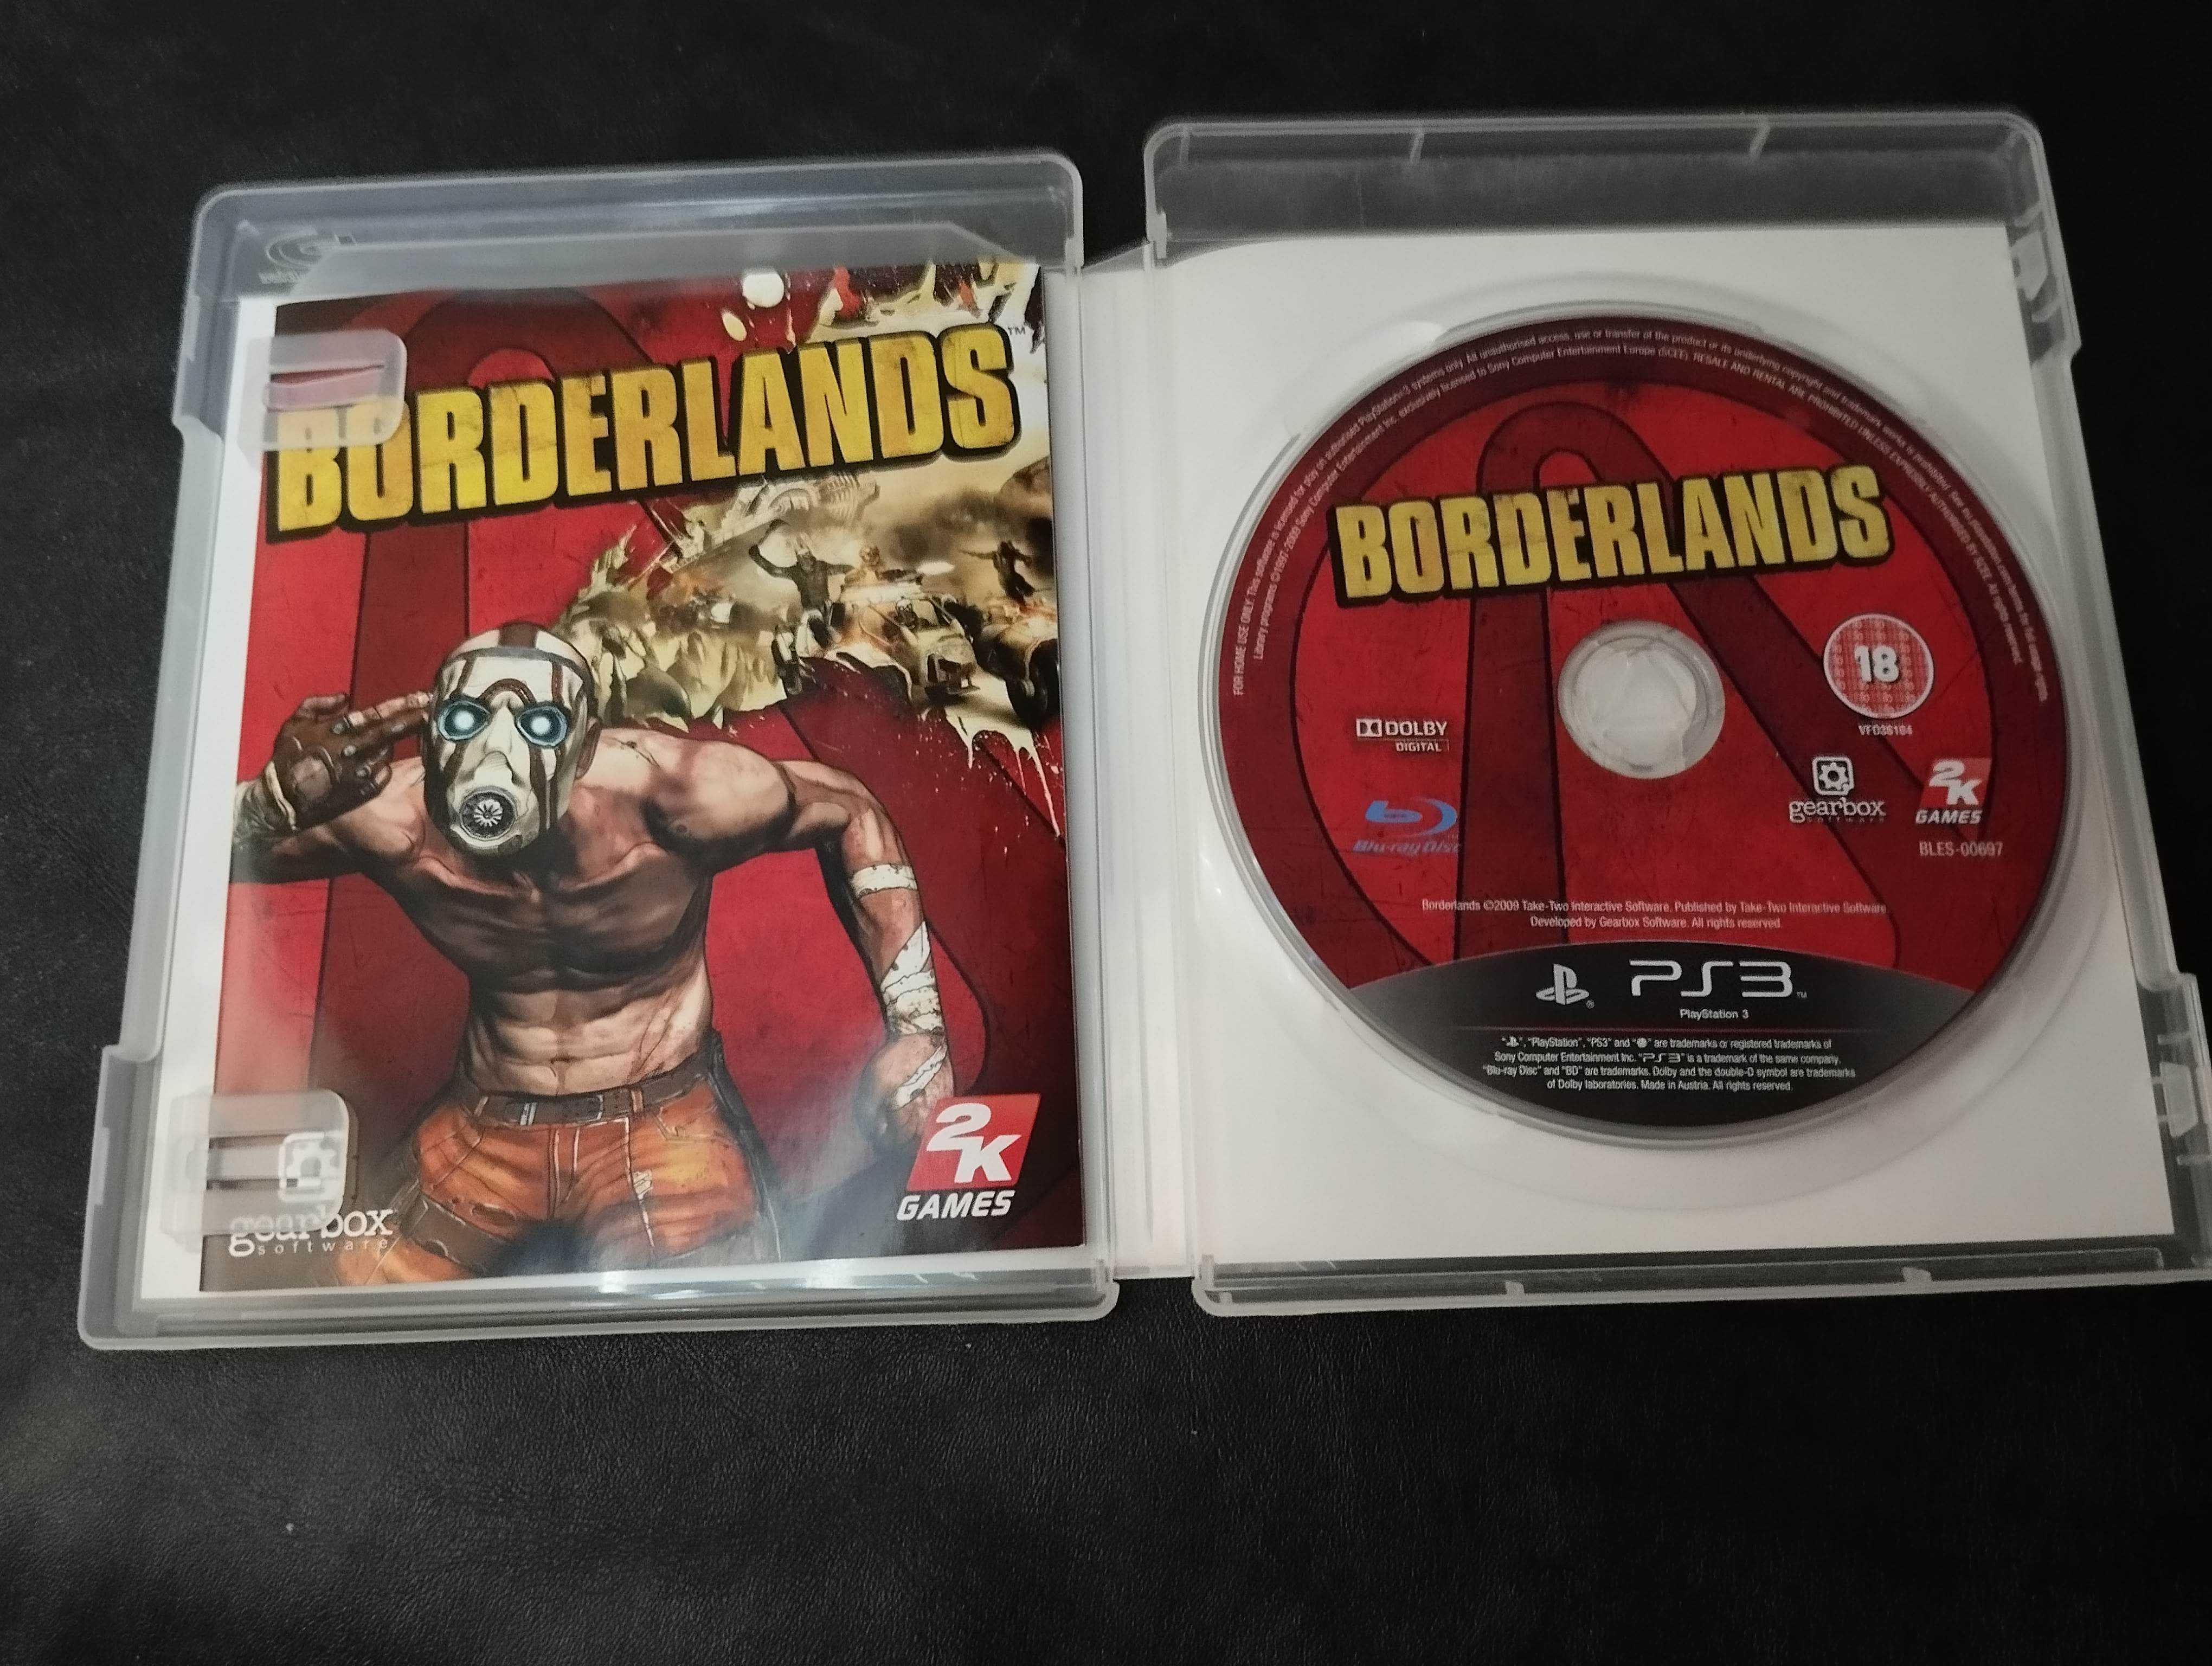 Borderlands - PS3 - kultowa strzelanka, duży wybór gier PlayStation